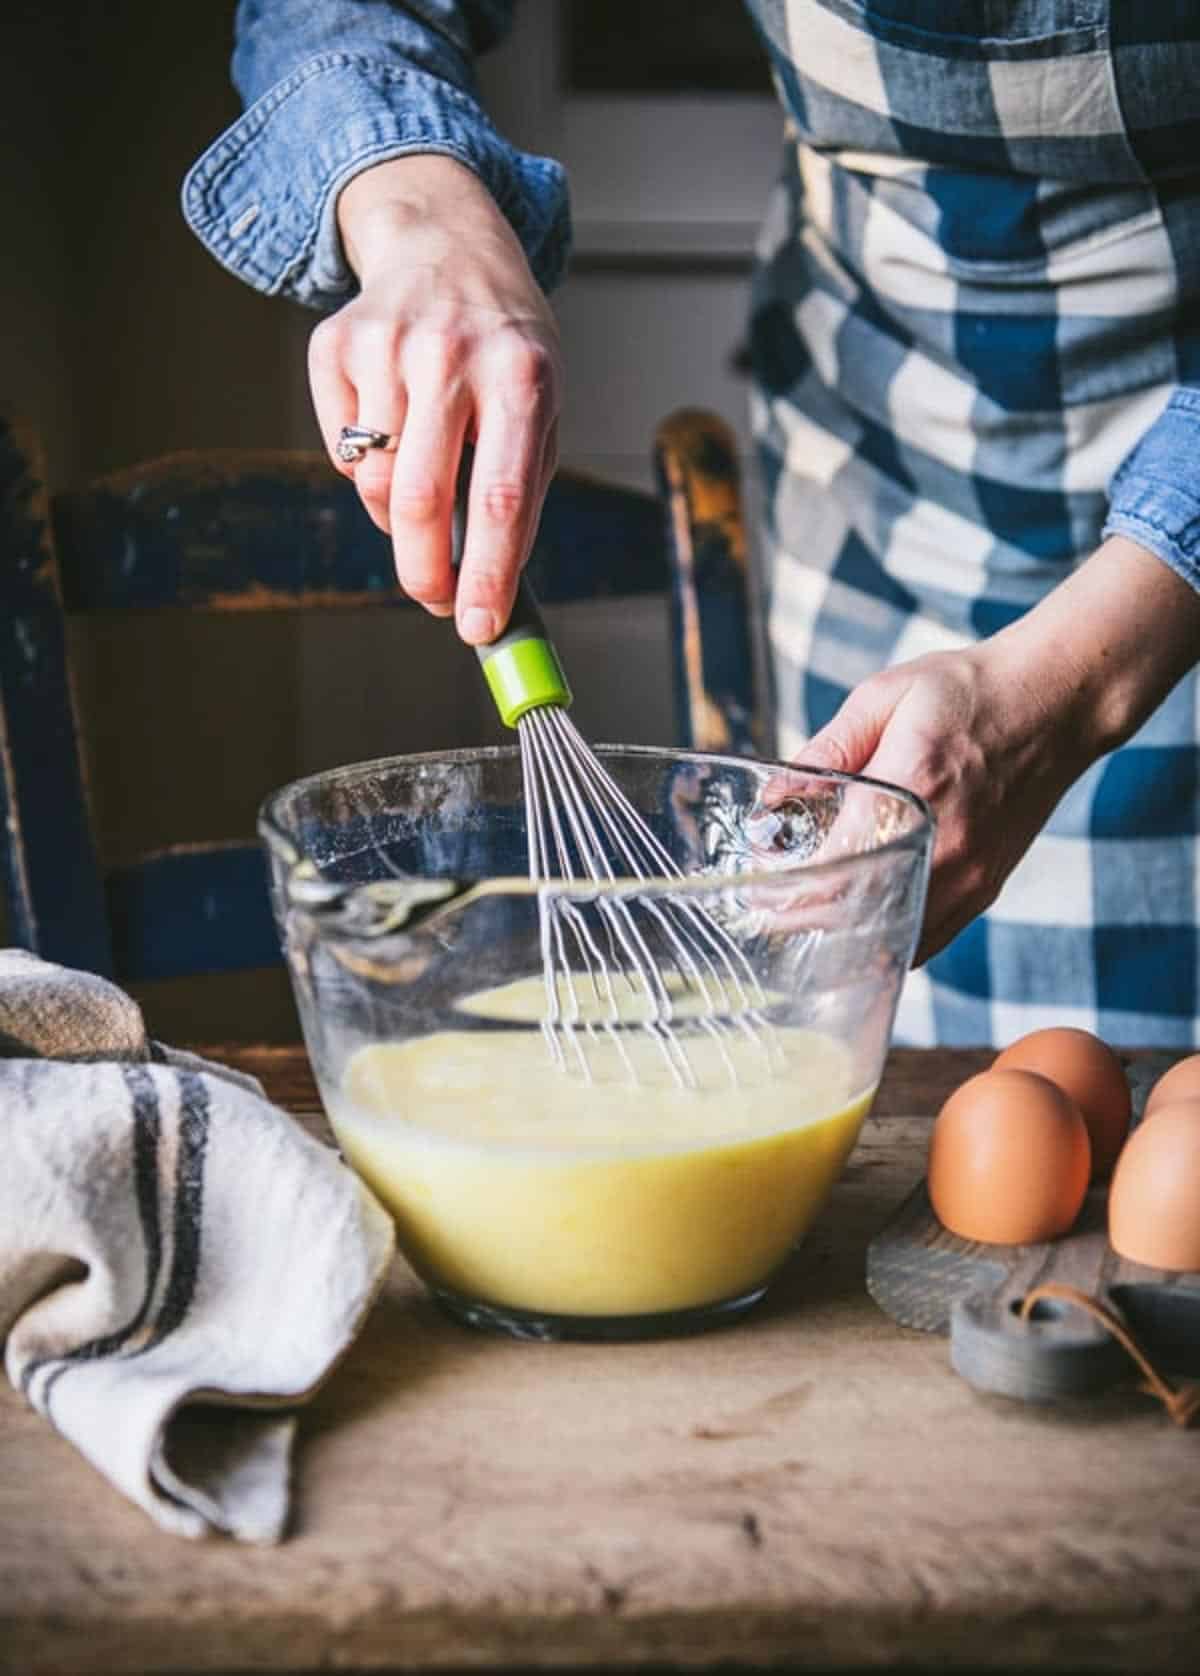 Process shot showing how to make mini egg bites